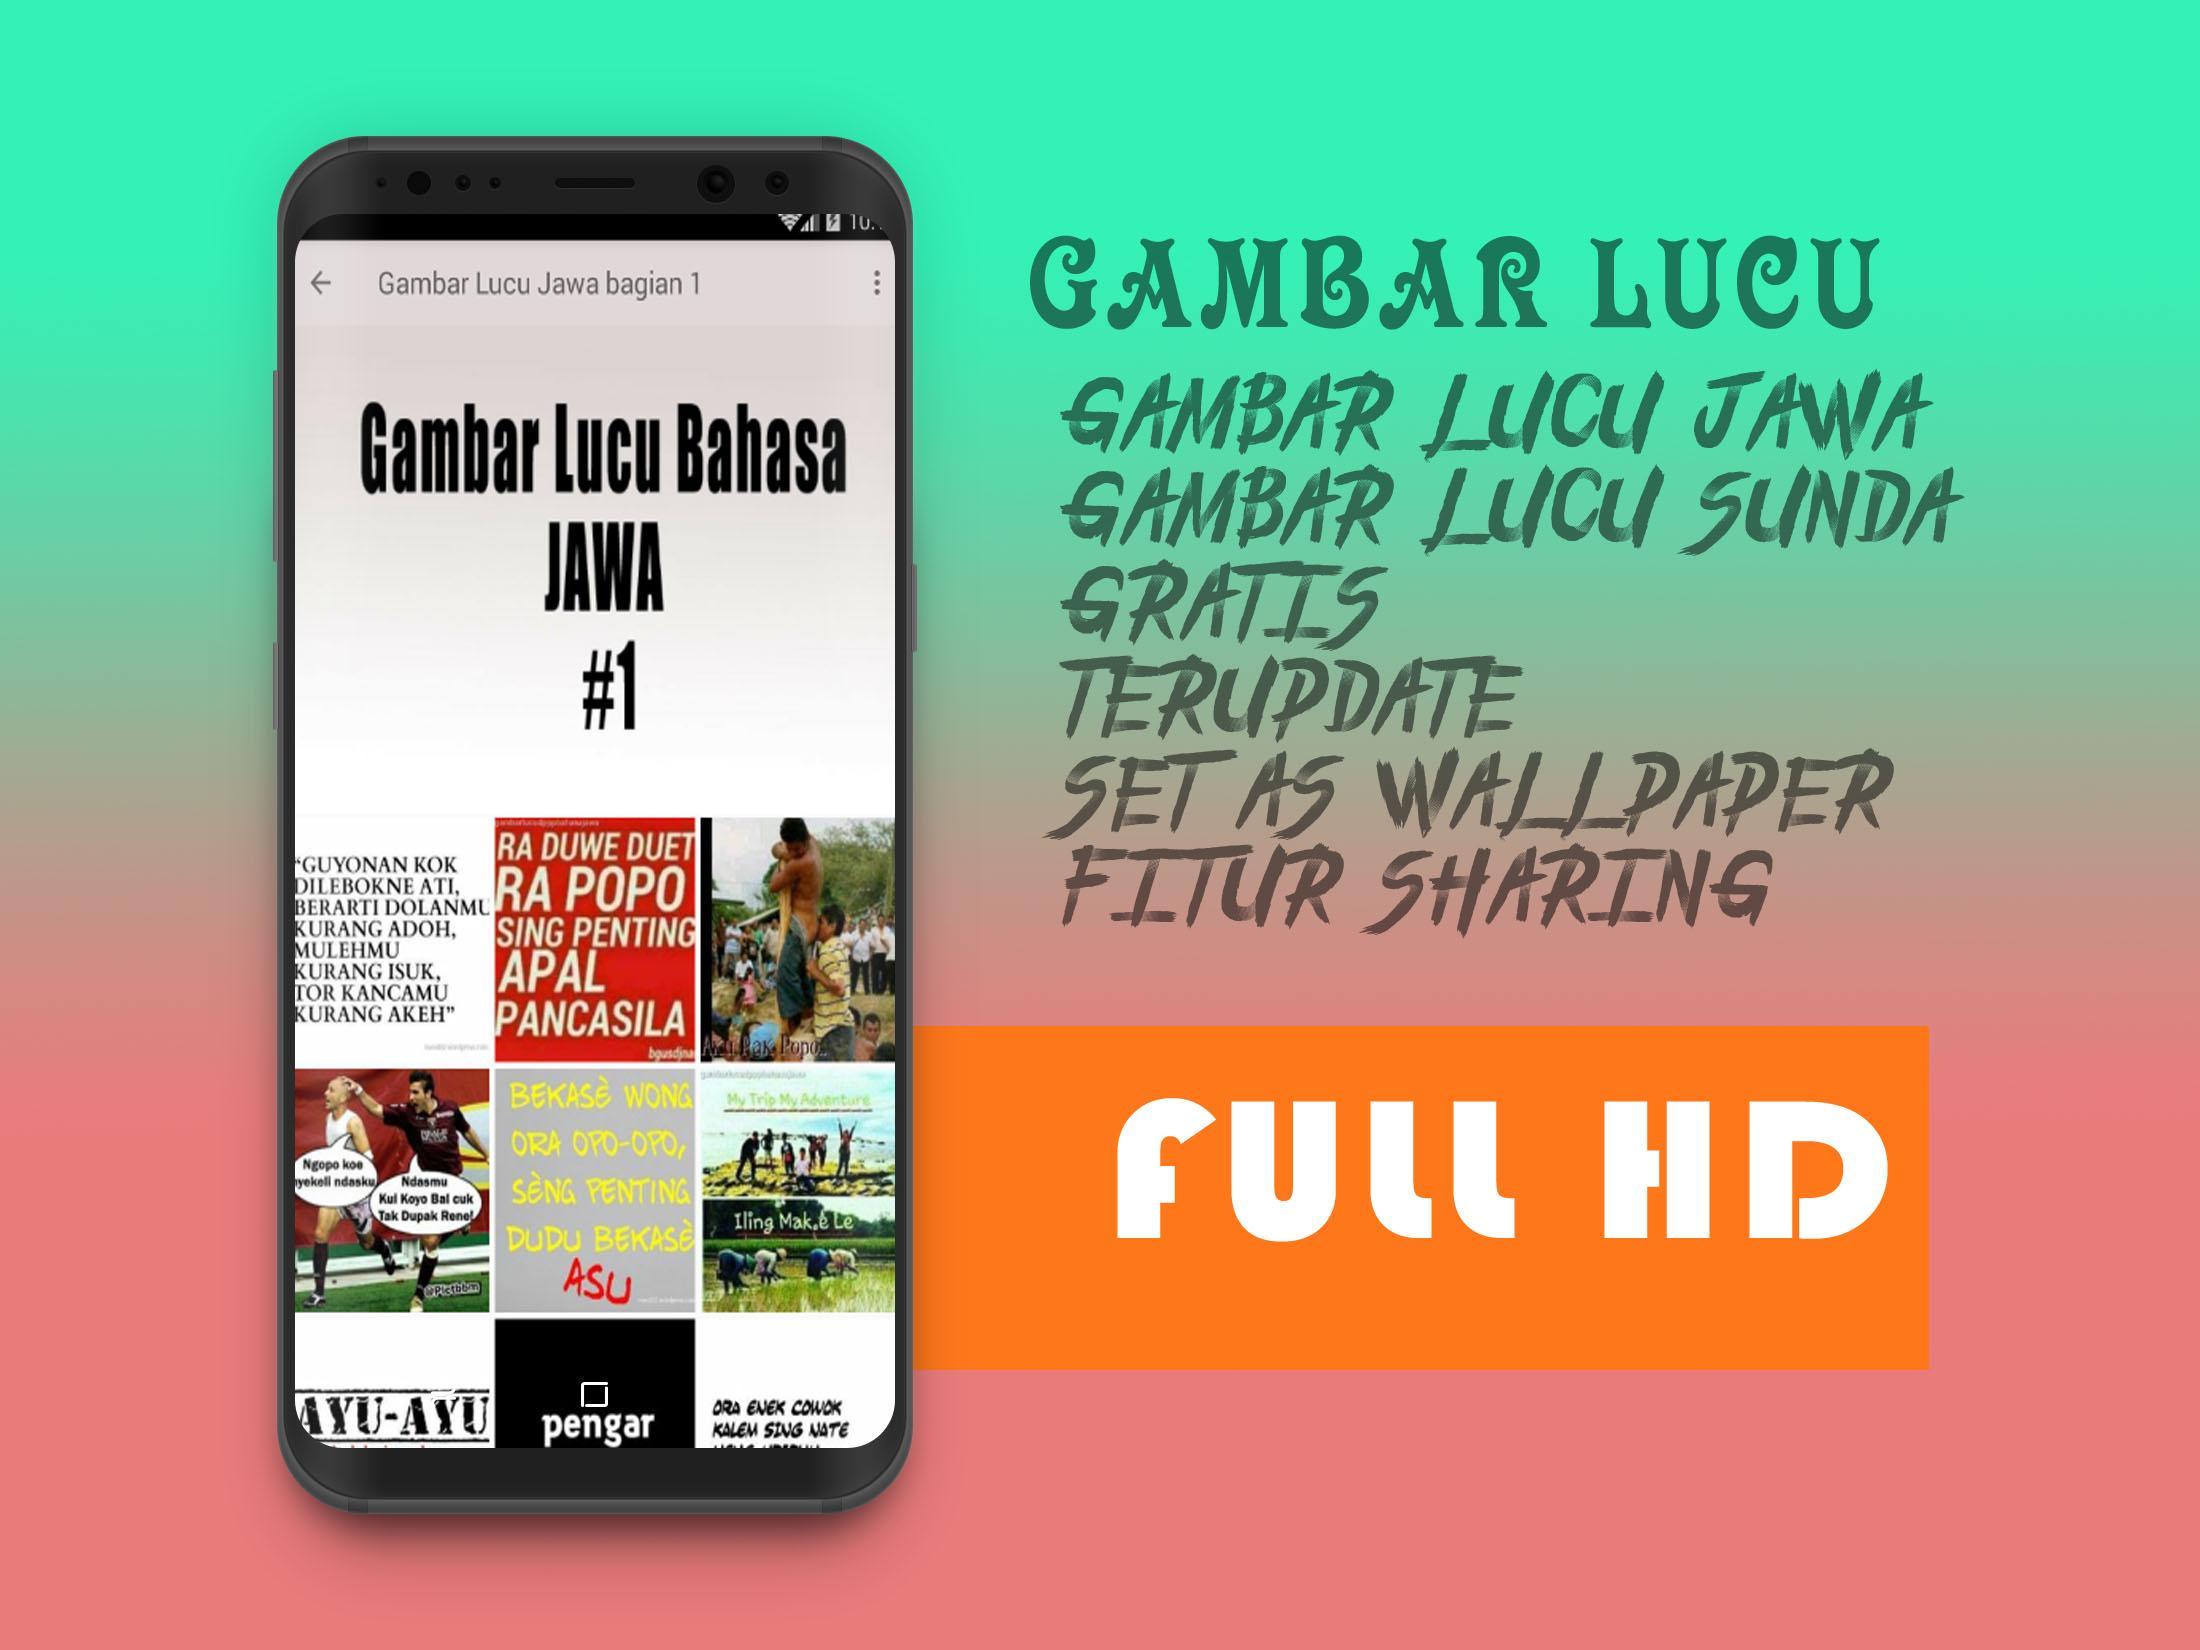 Gambar Lucu Bahasa Jawa Sunda For Android Apk Download